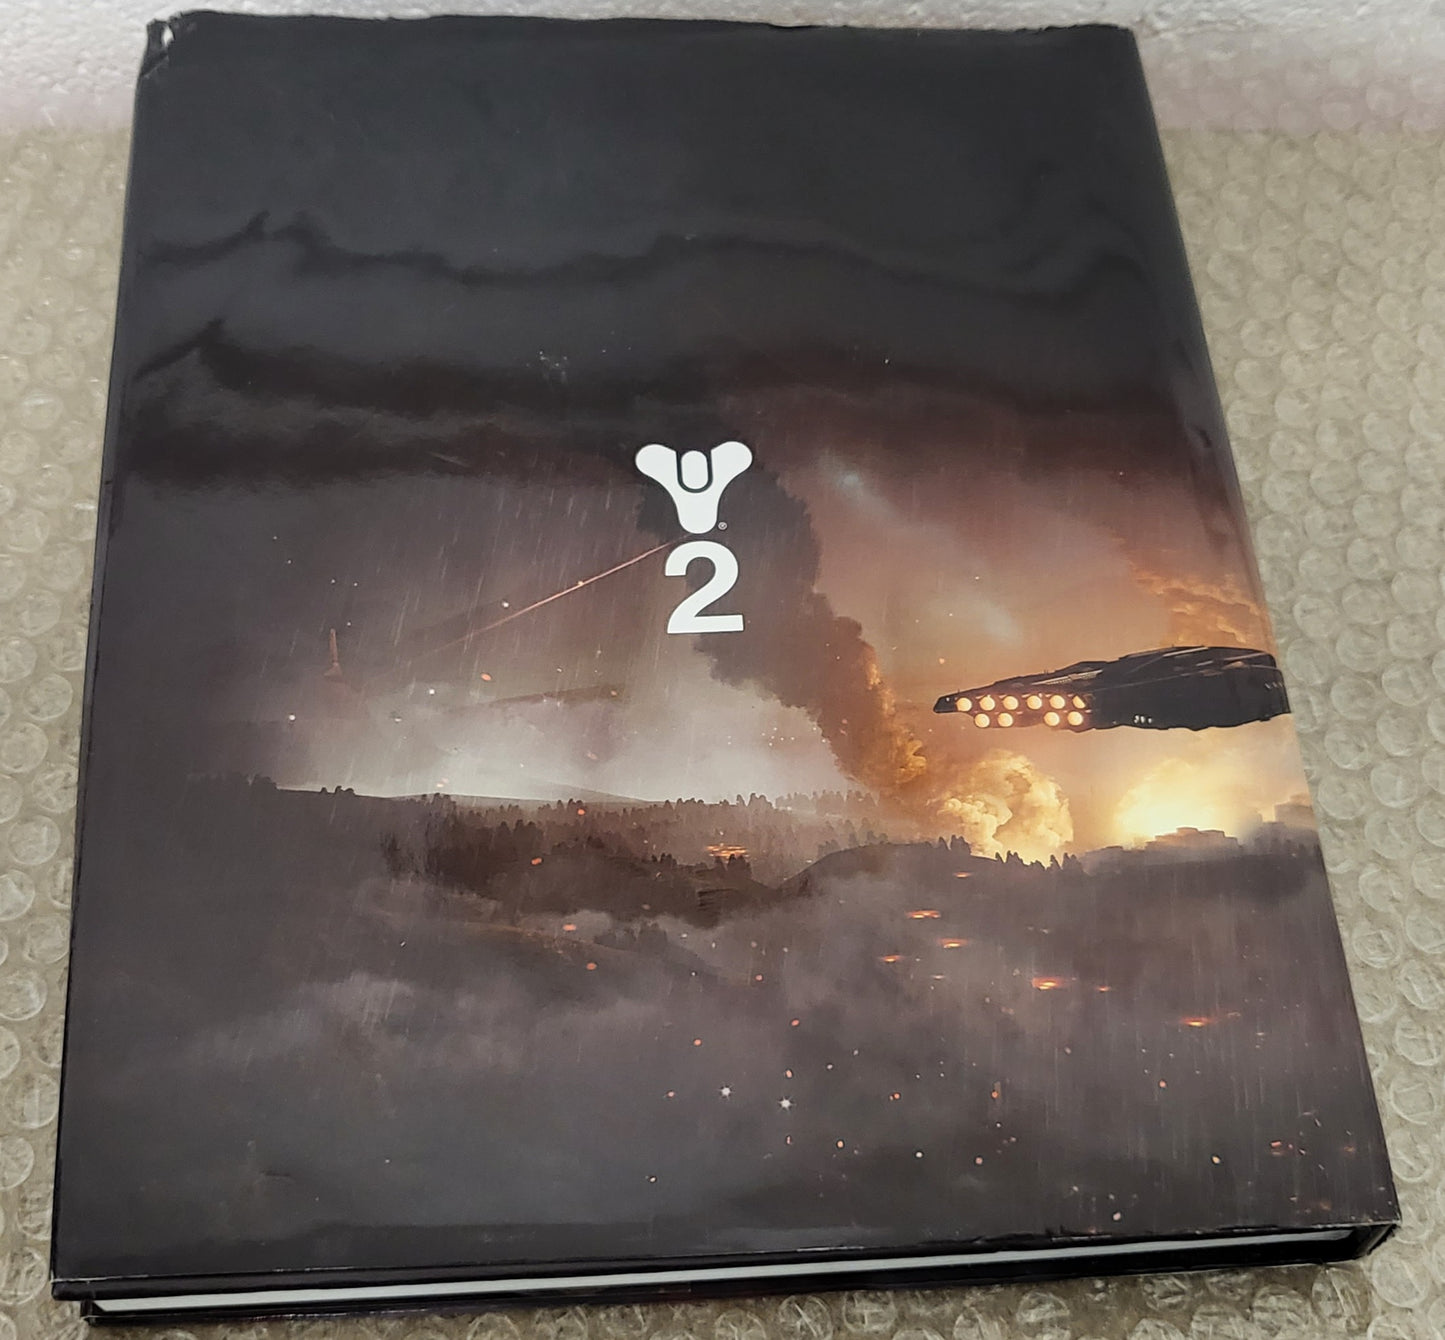 Destiny 2 Collector's Edition Guide Book